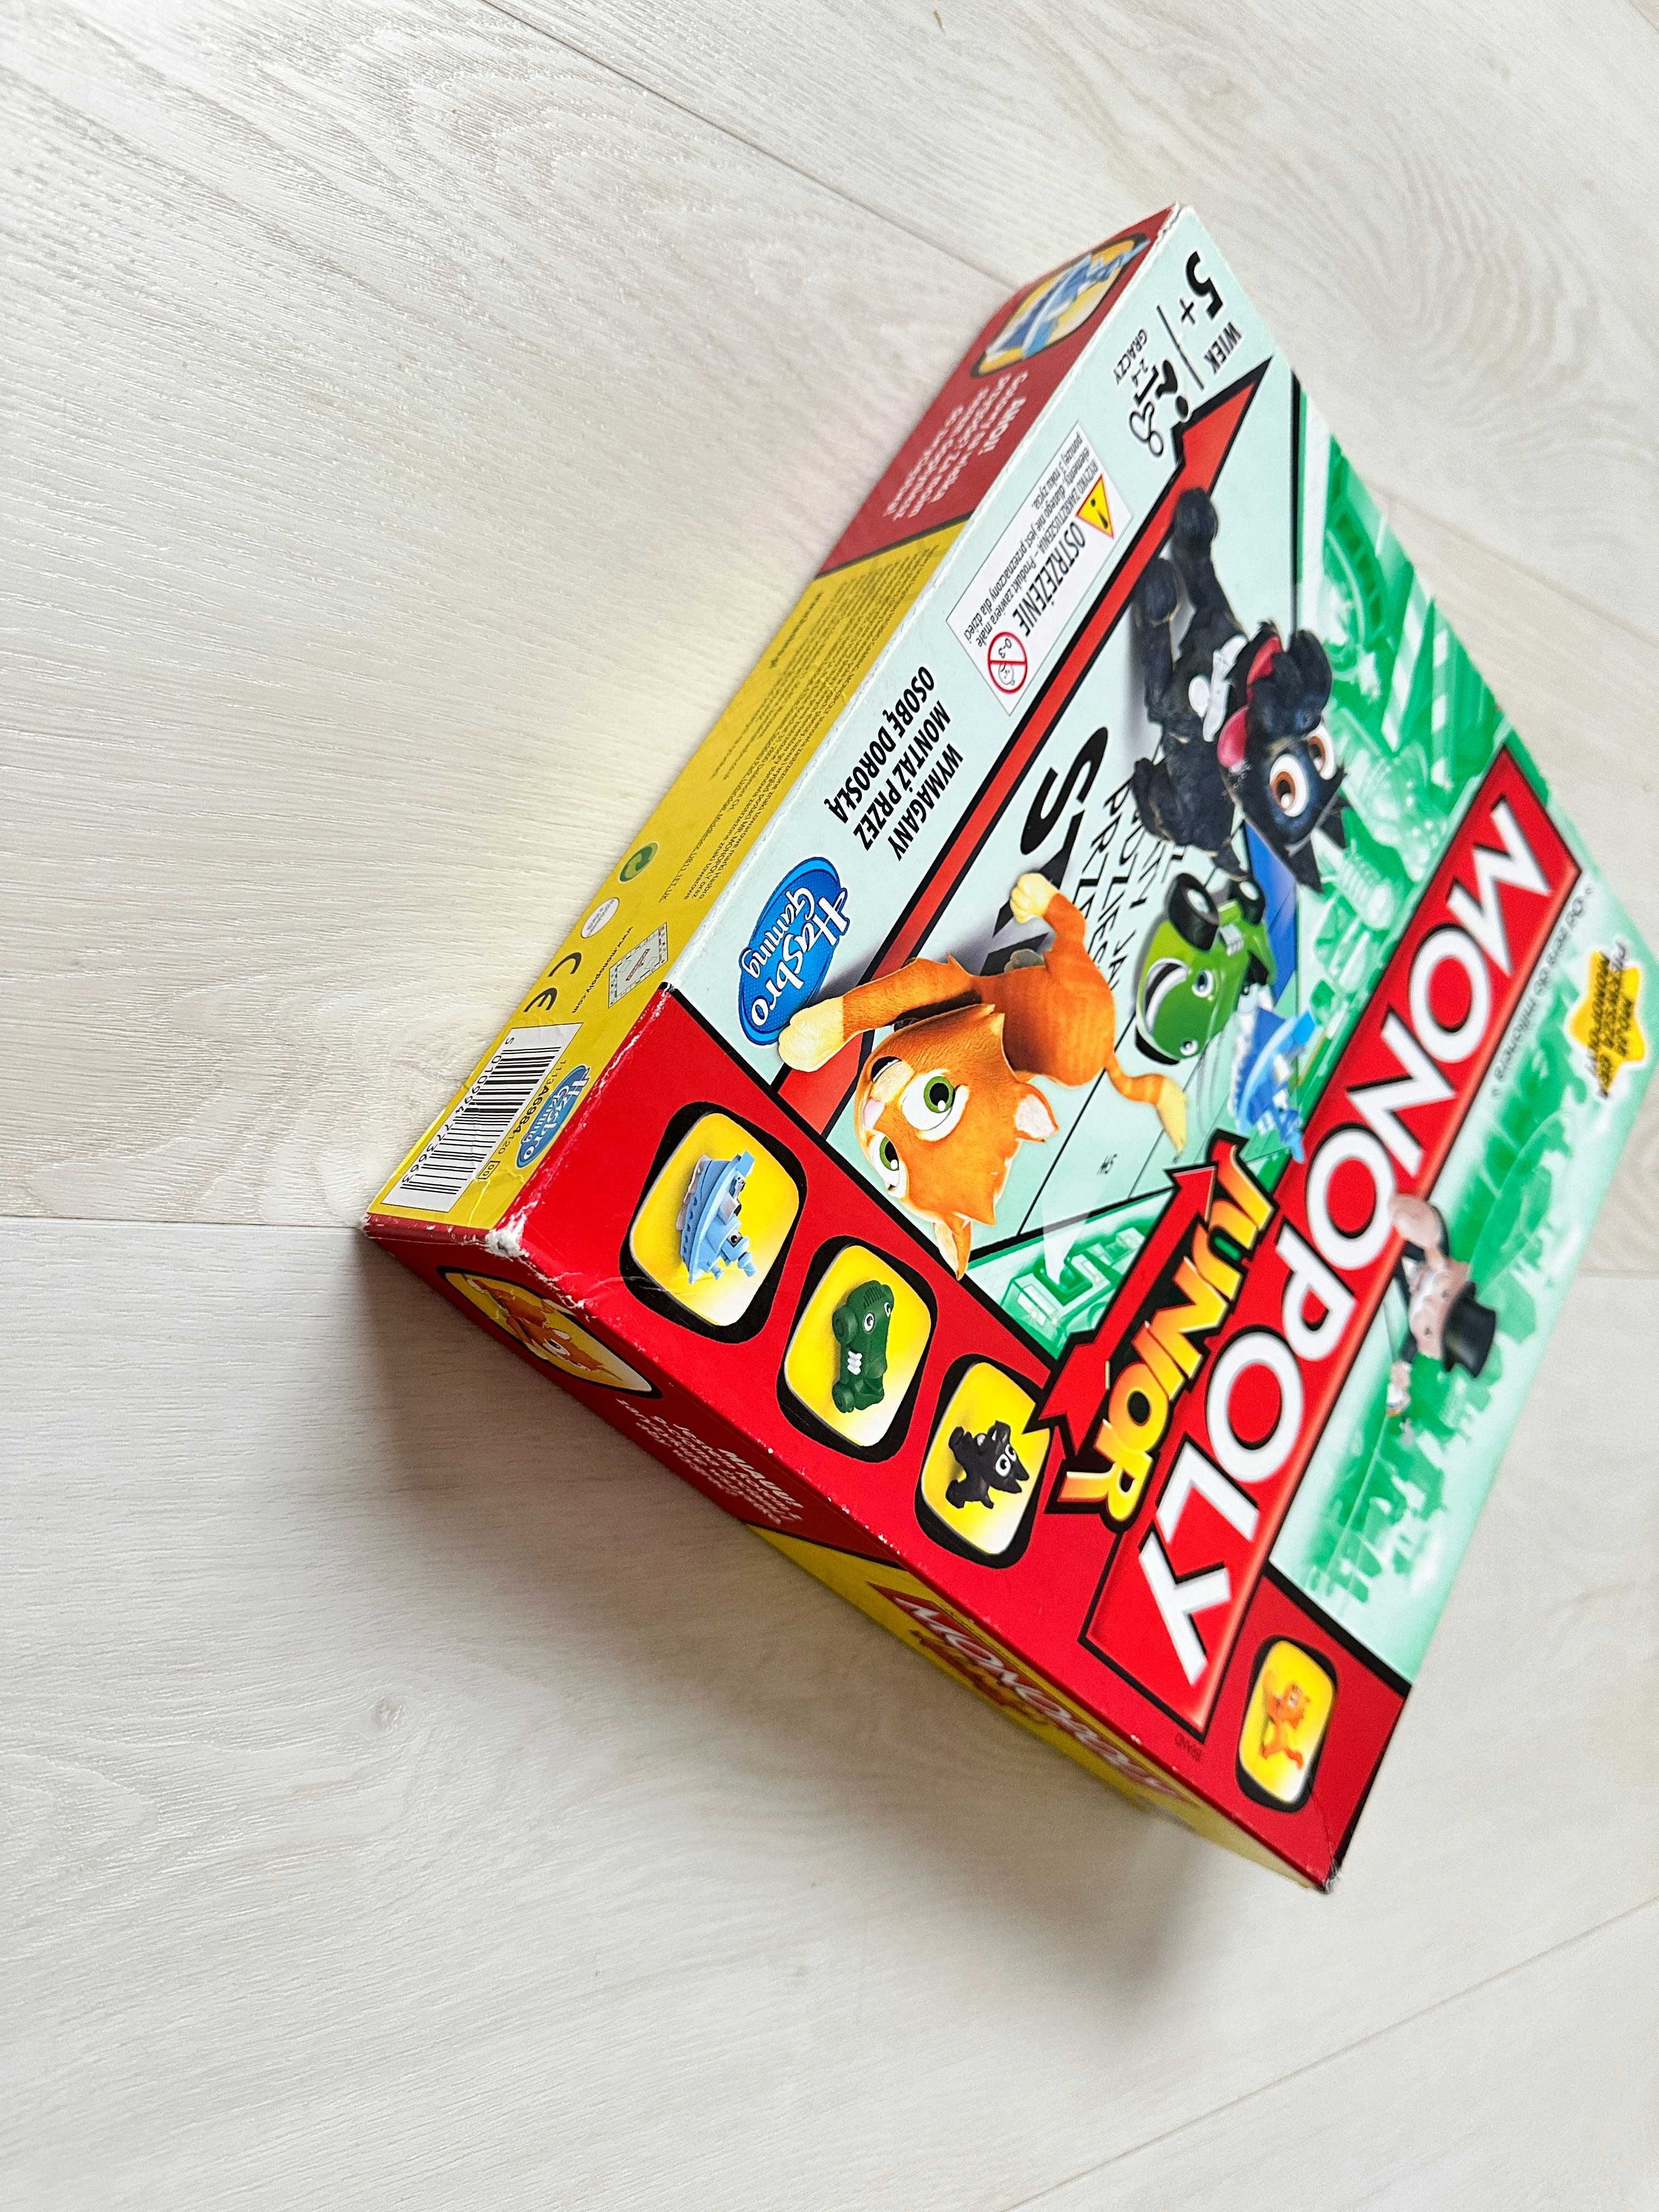 gra Monopoly Junior Hasbro 5+